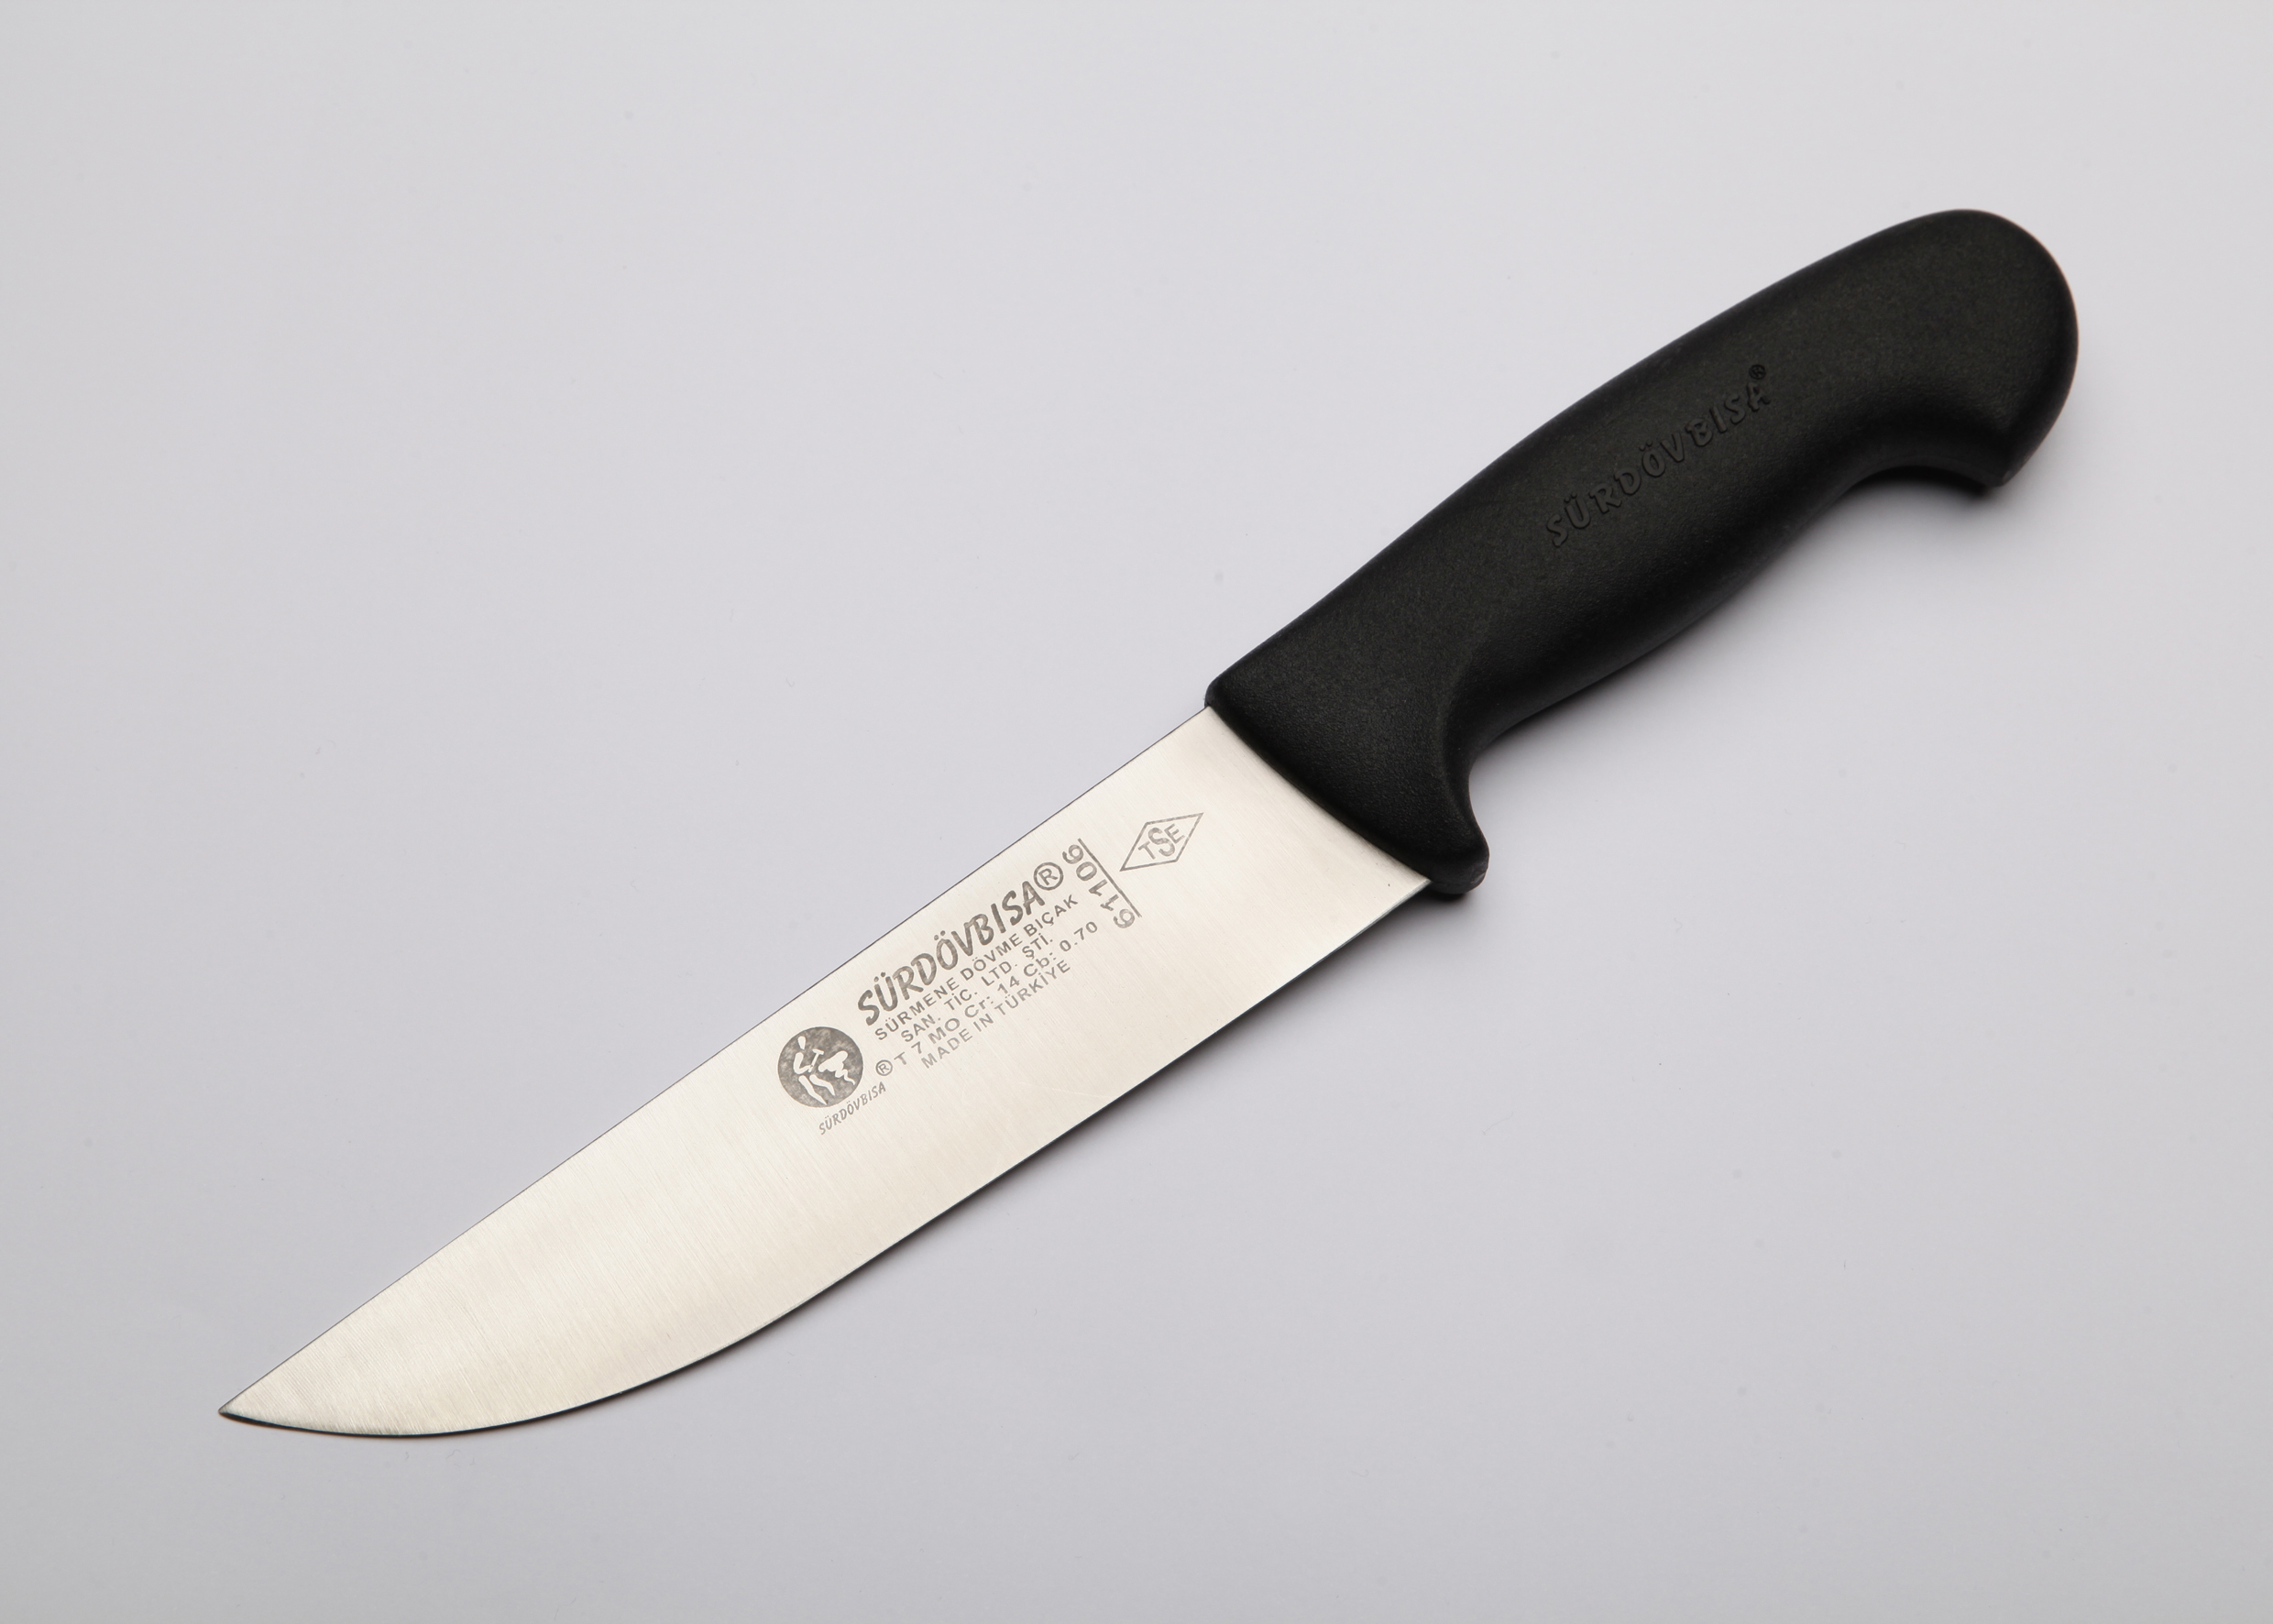 F61106 SÜRDÖVBISA Pimsiz Plastik Sap Kasap Bıçağı